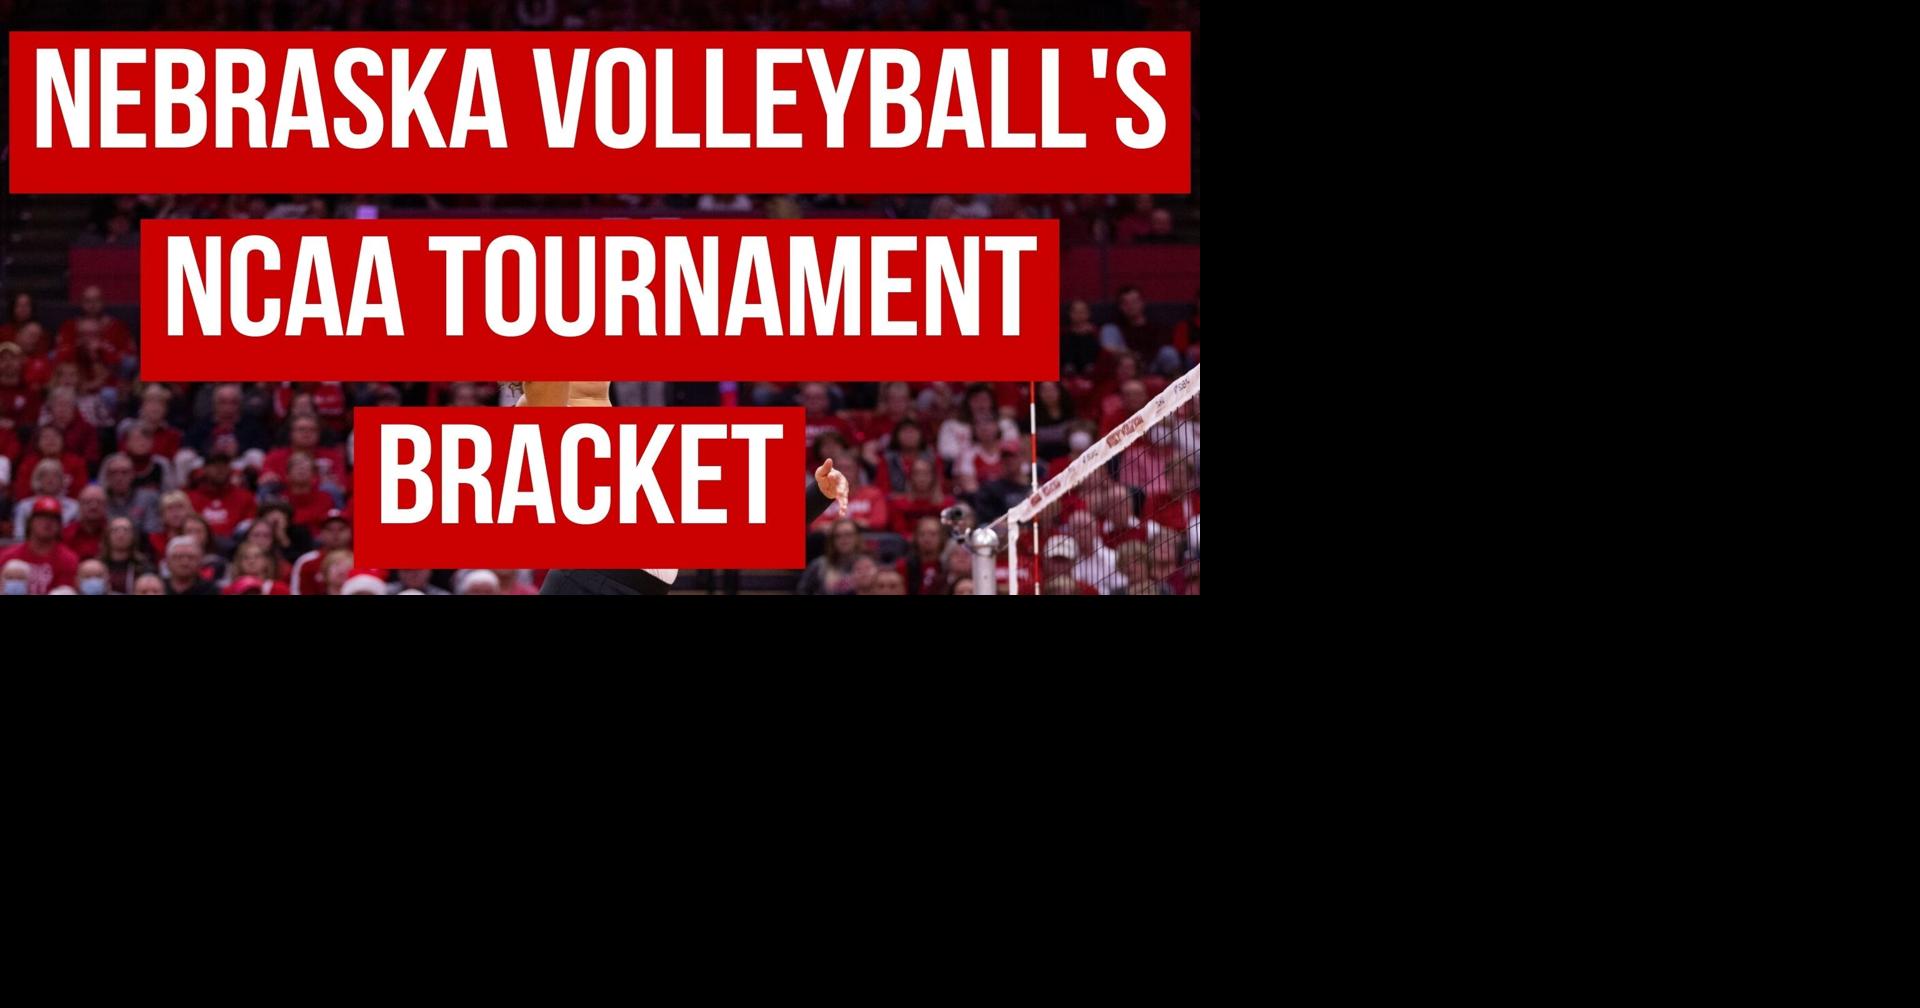 Nebraska volleyball's NCAA tournament bracket